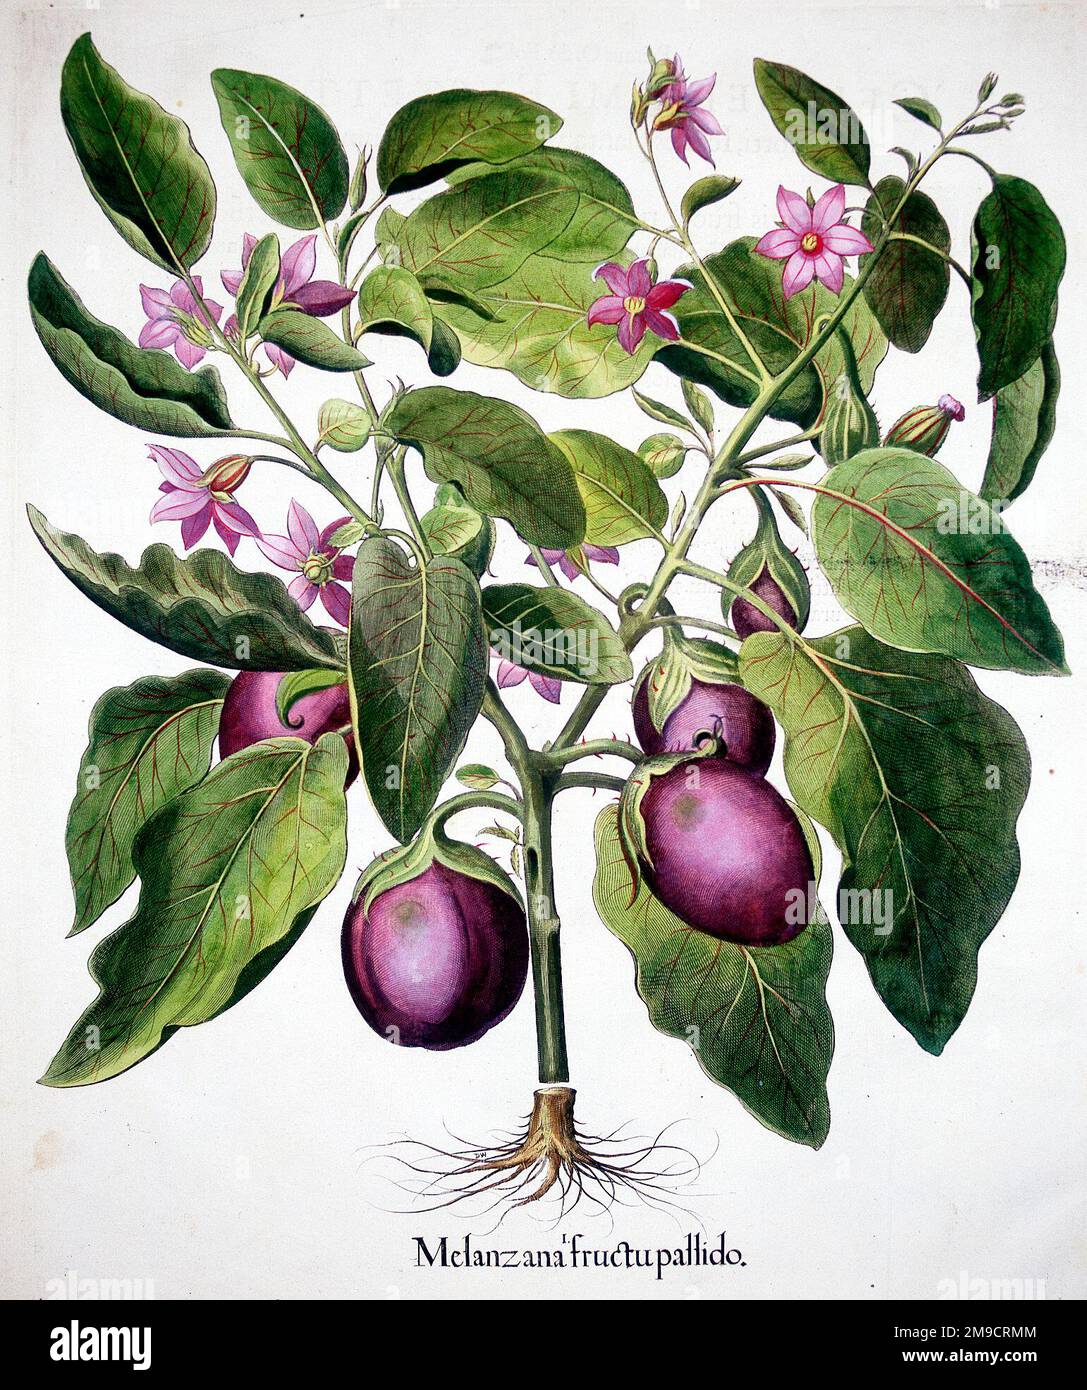 Hortus Eystettensis - Melanzana Fructu Pallido - Aubergine Stock Photo